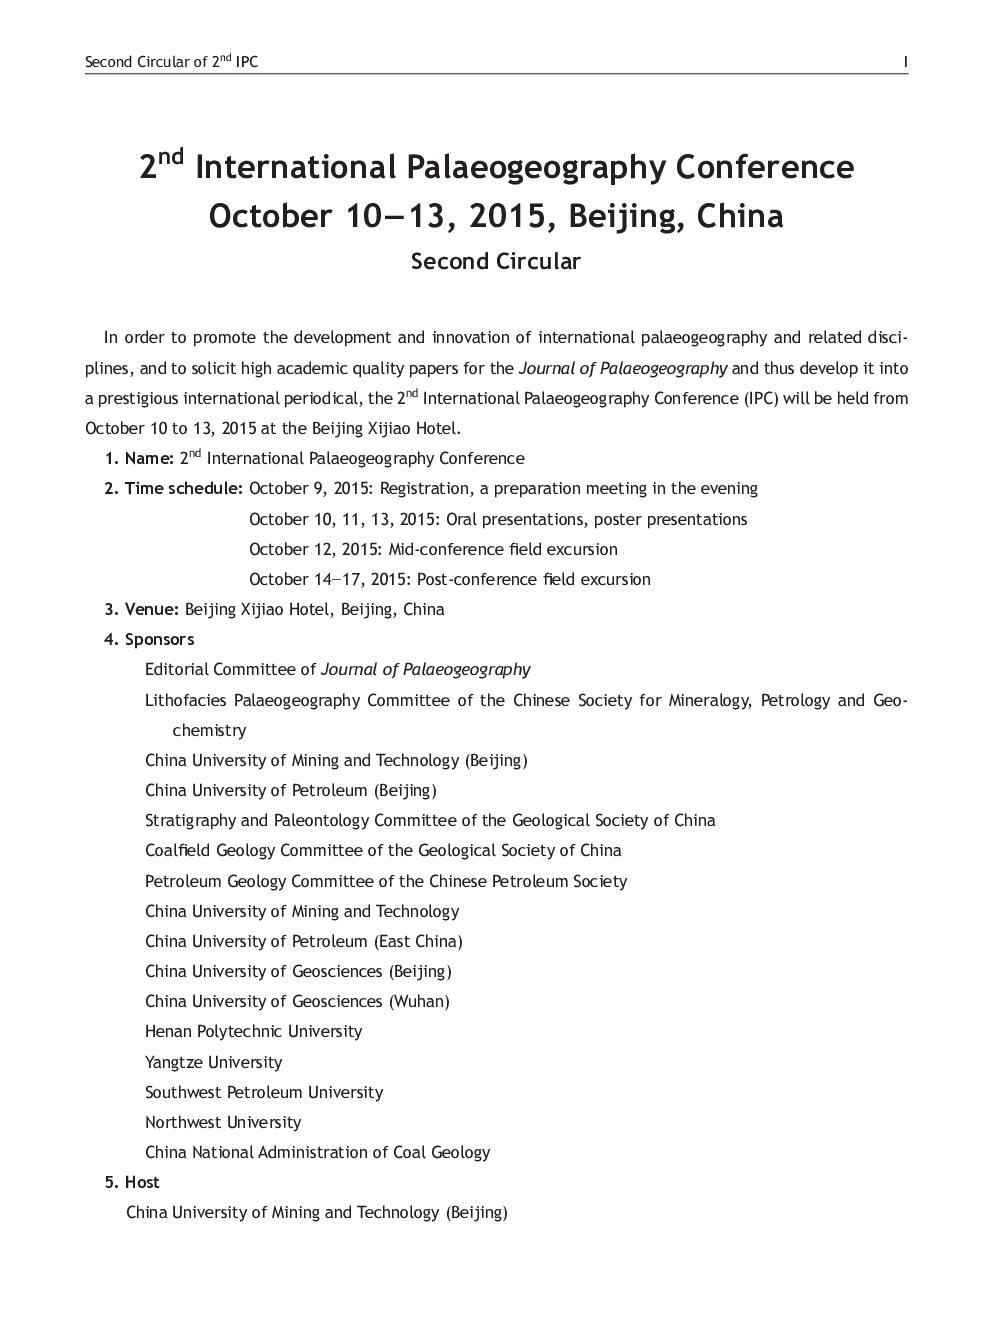 2nd International Palaeogeography Conference October 10-13, 2015, Beijing, China